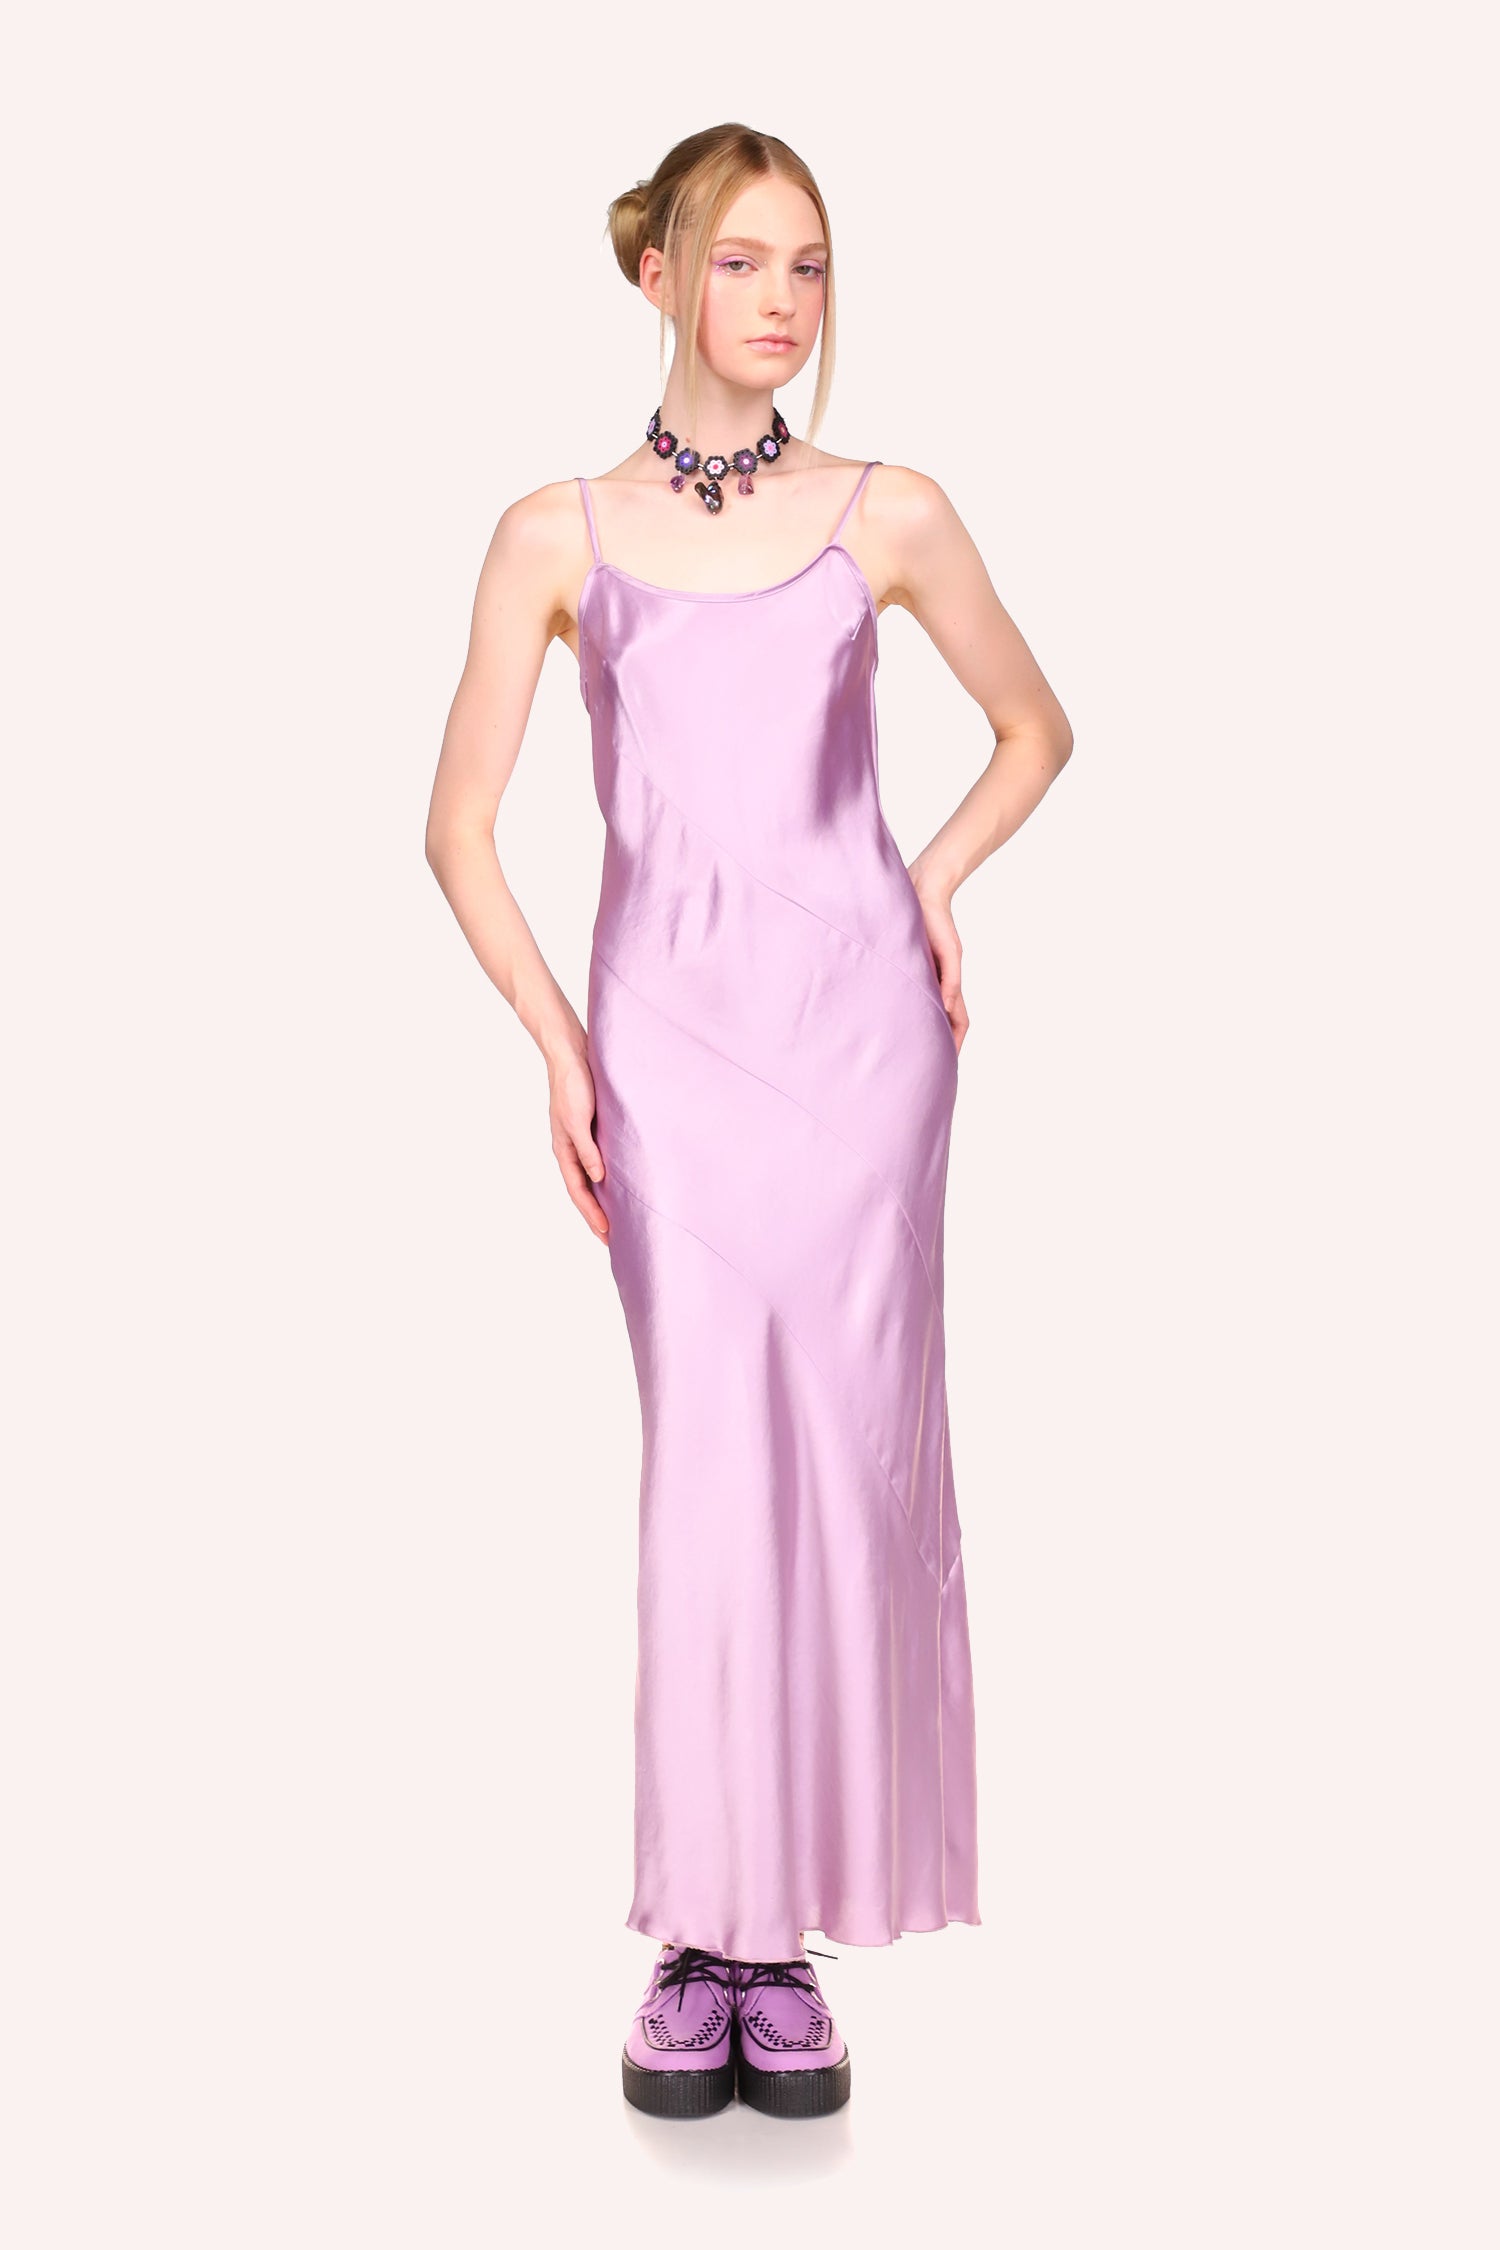 Tight-fitting Satin Slip dress lavender, 2-straps, round collar cut, ankle length, diagonal wrap design